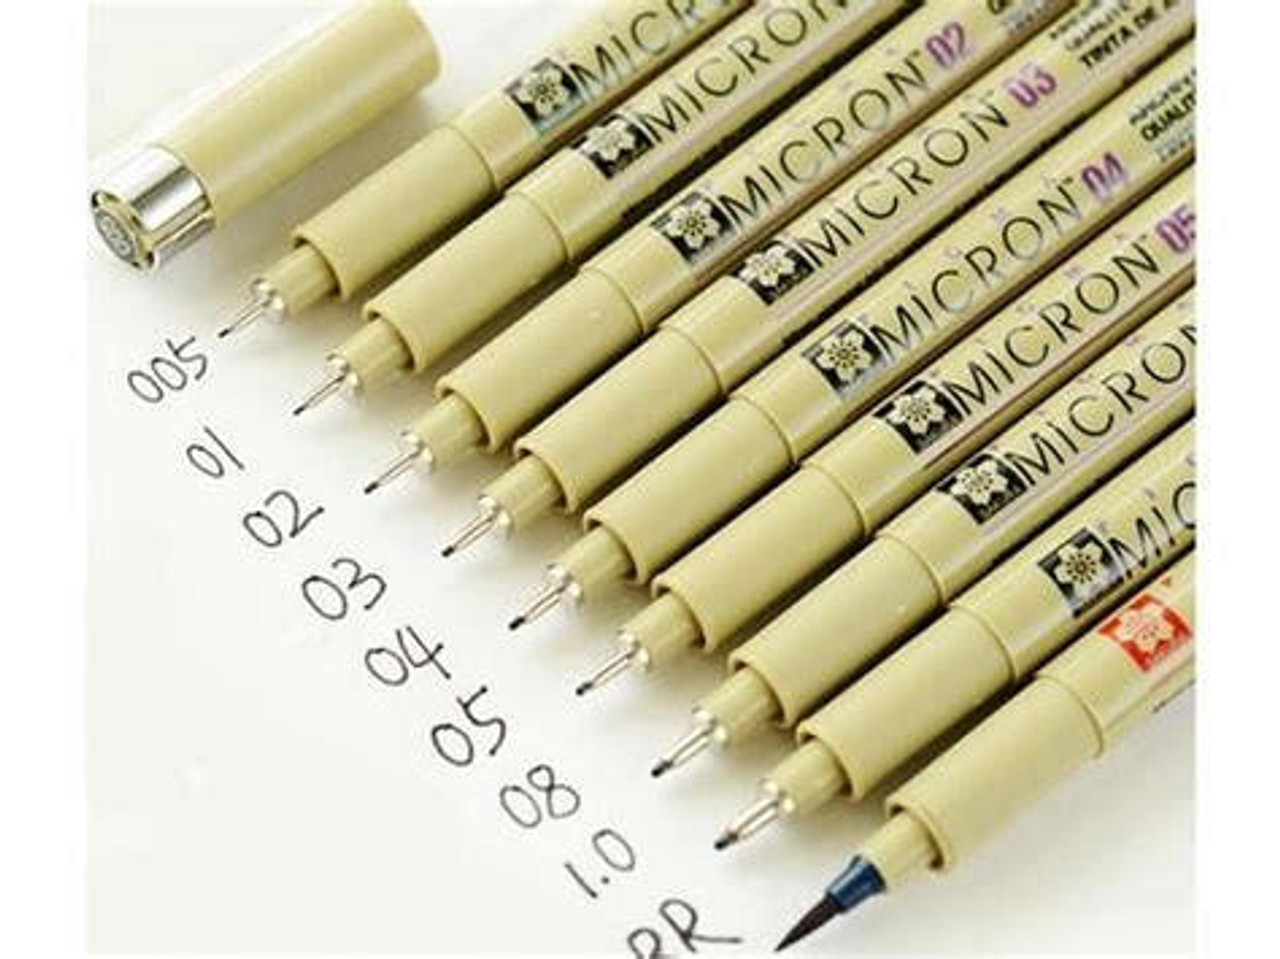 Sakura - Pigma Micron Pen - Set-Black Ink - 6-Pen Set